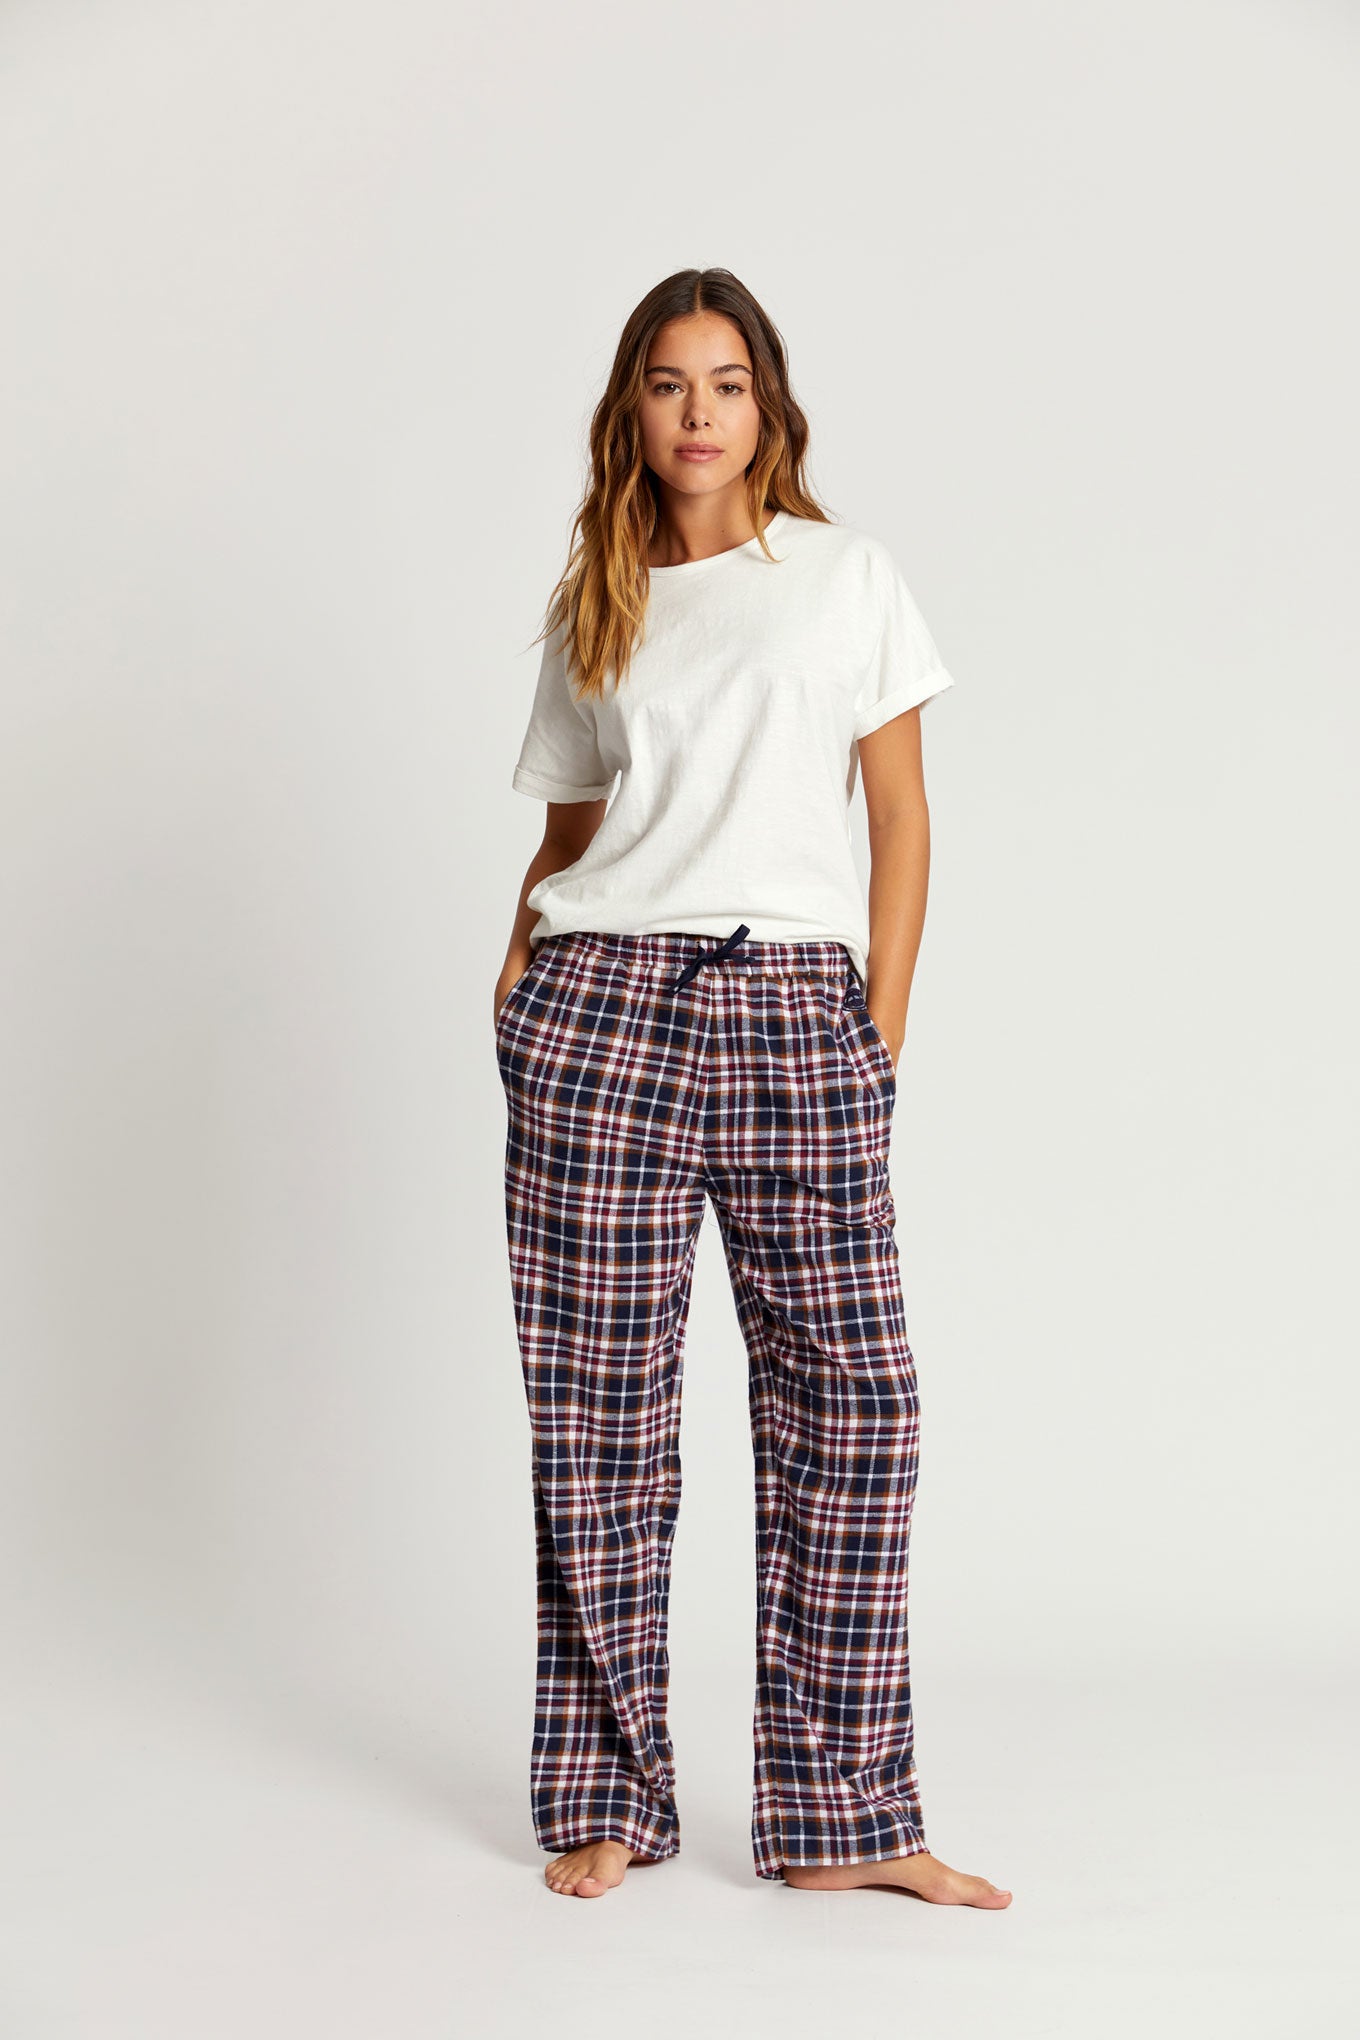 Personalised Pyjamas Women's. Design Your Own Customised PJs